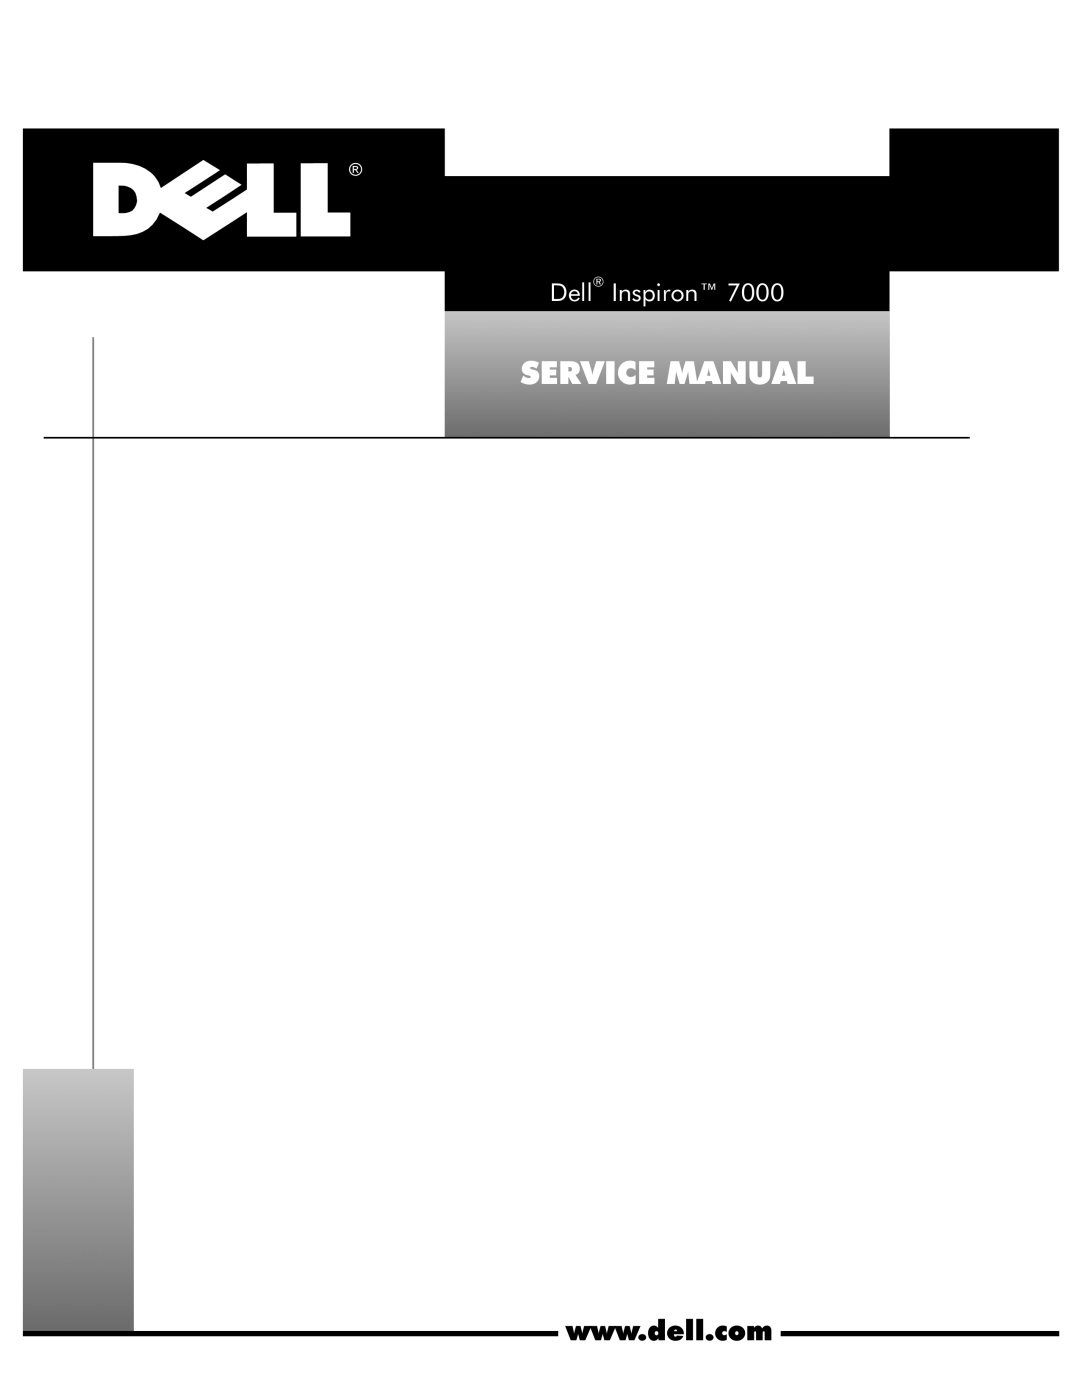 Dell 7000 manual 659,&0$18$, Zzzghoofrp, Hooš,Qvslurqœ 